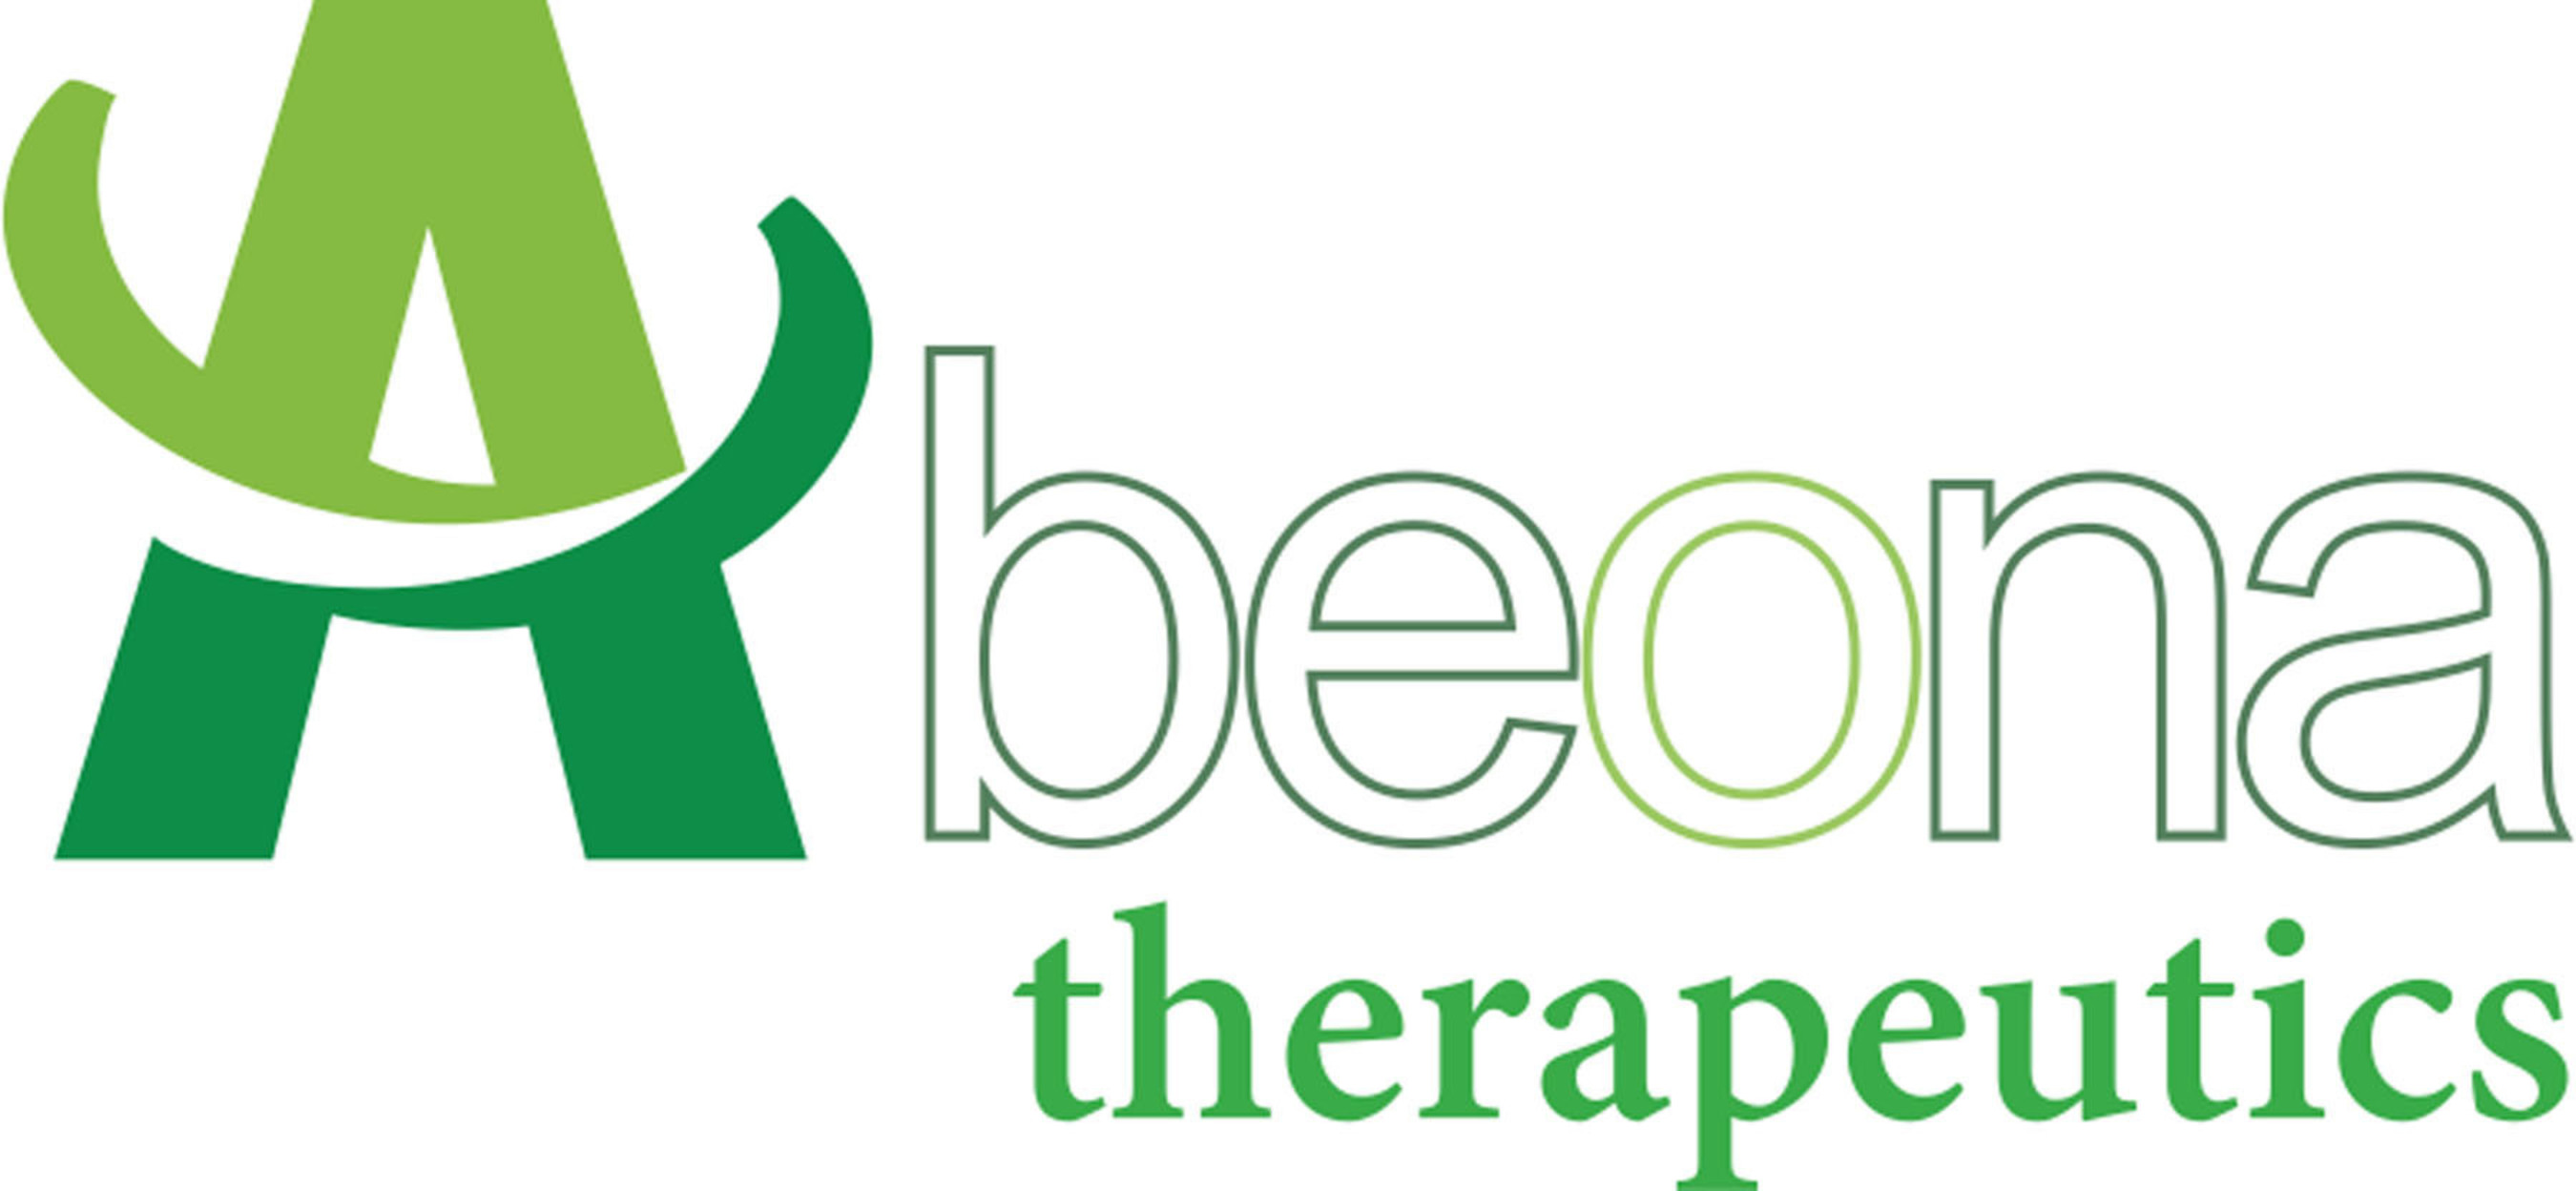 Abeona Therapeutics Logo.